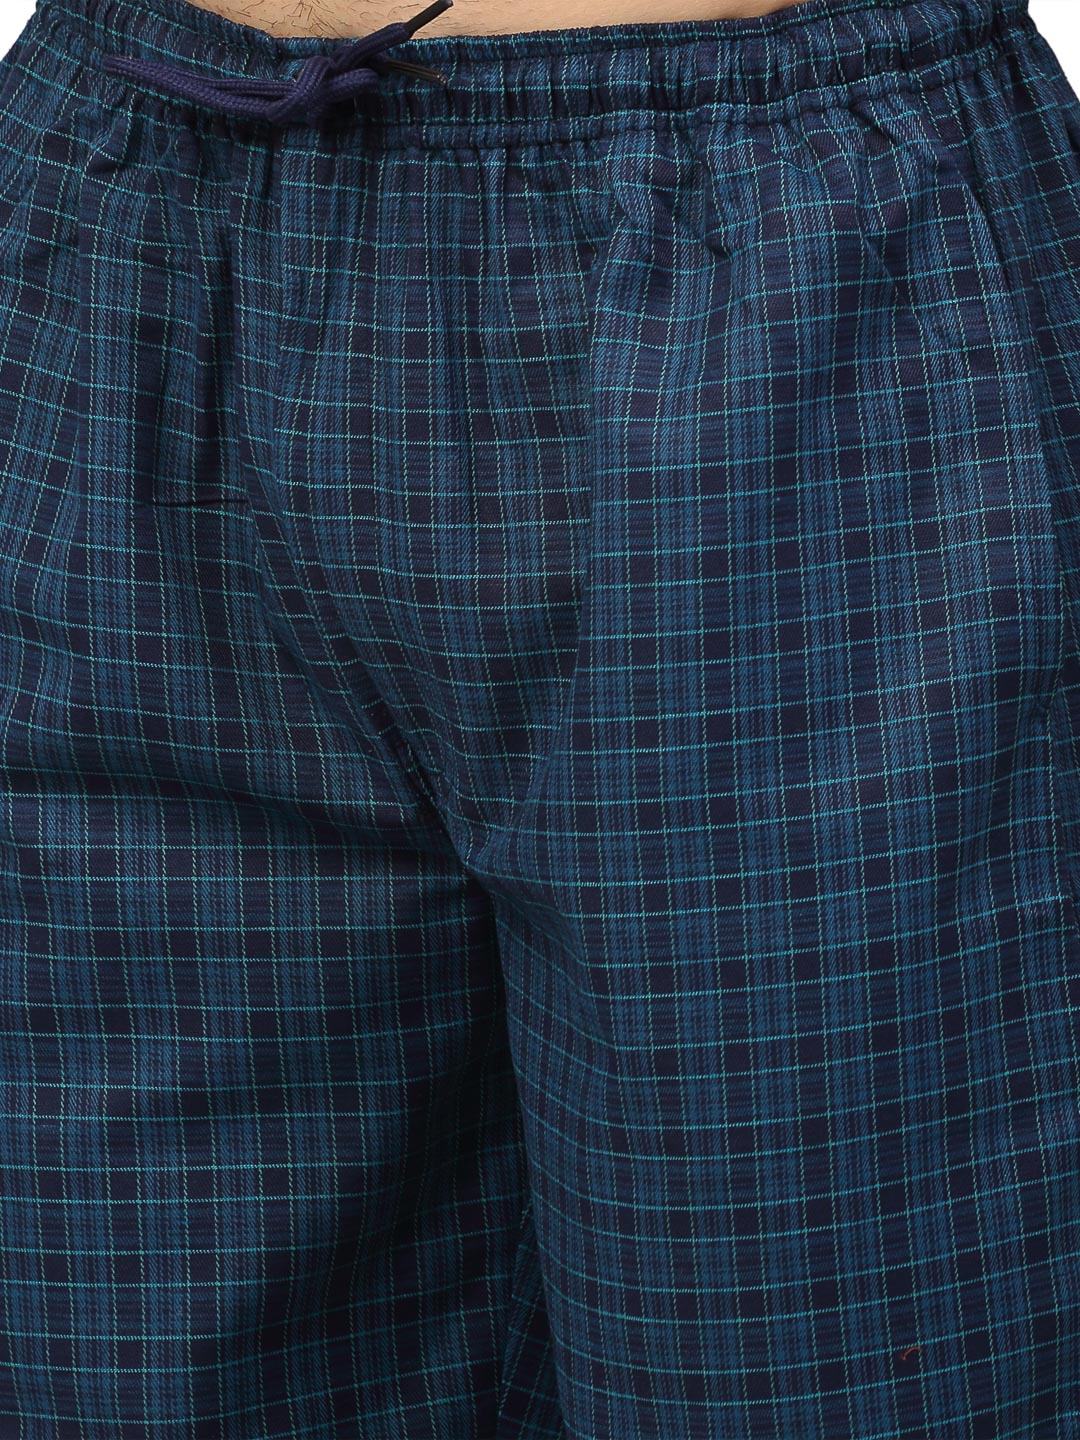 Men's Blue Cotton Checked Track Pants ( JOG 017Blue ) - Jainish